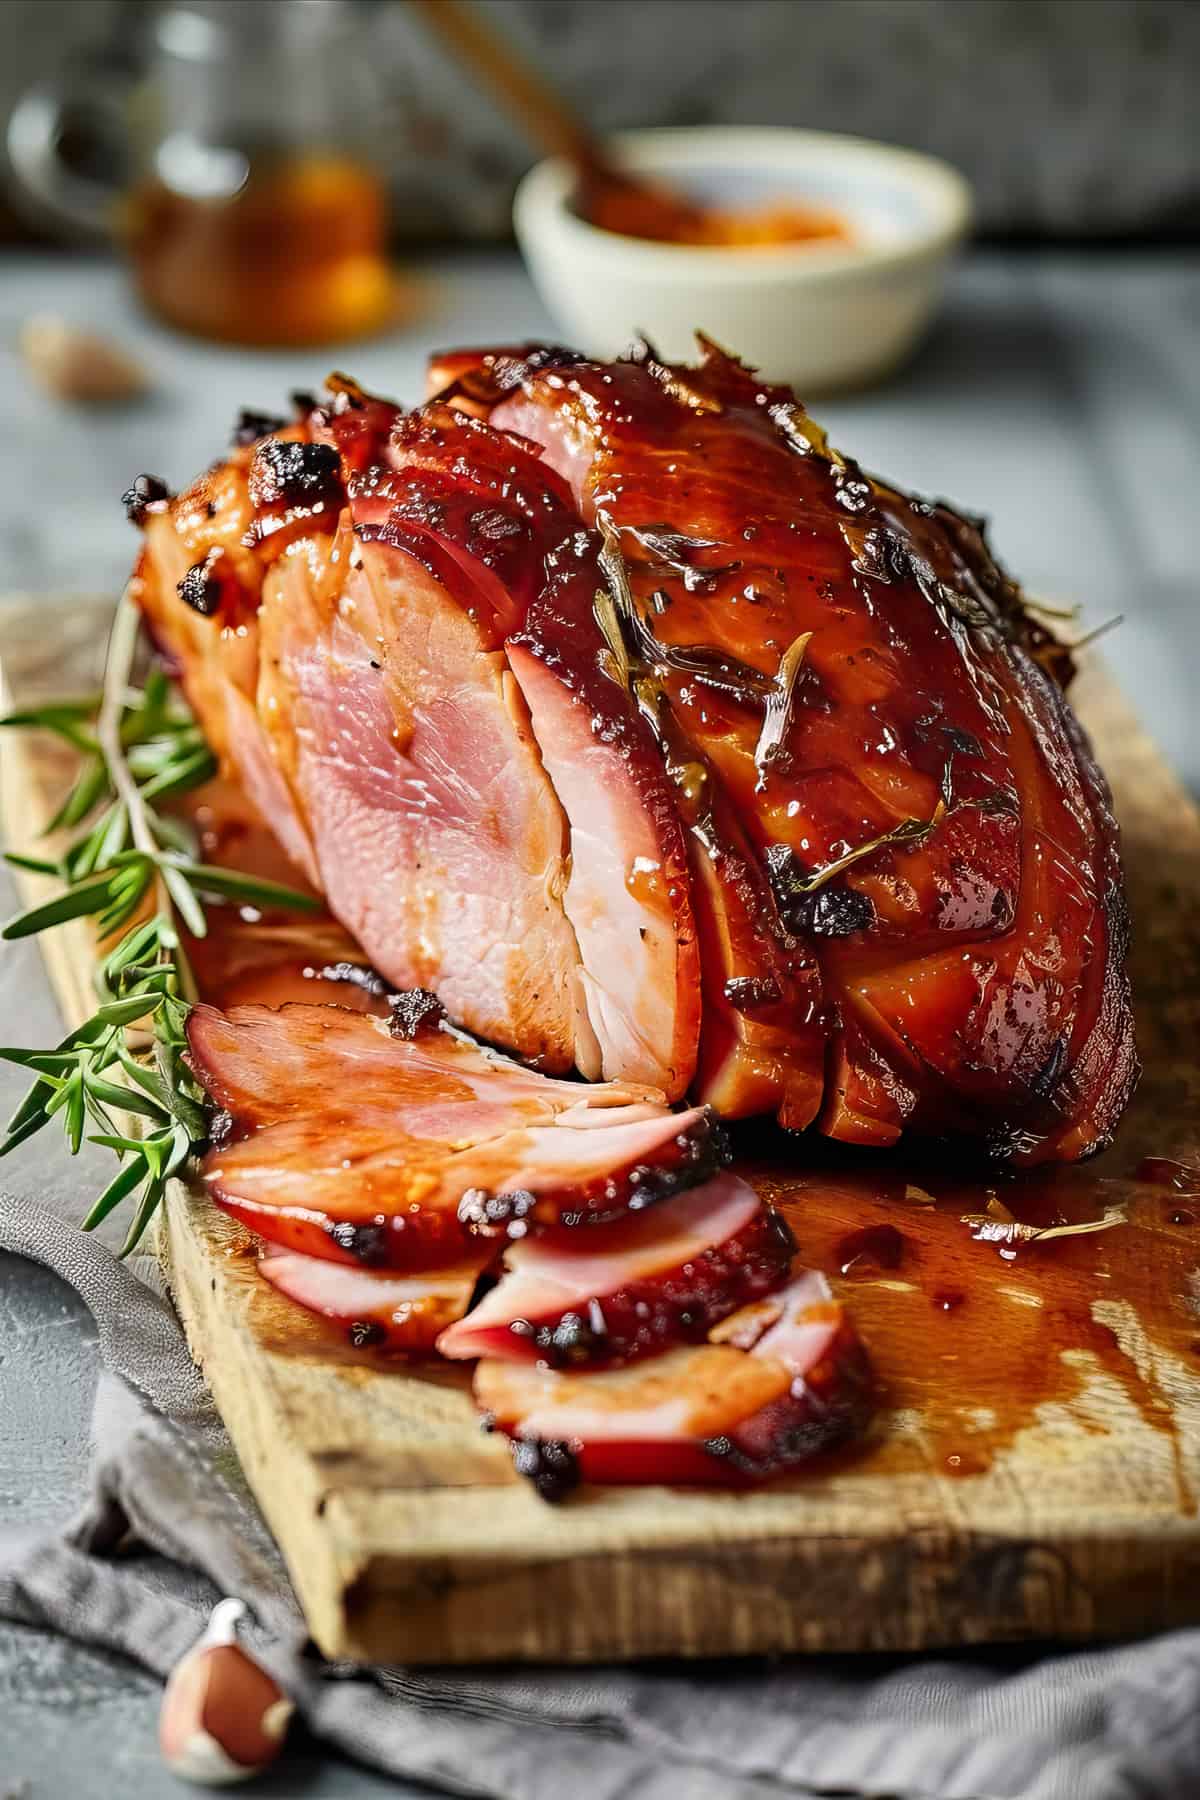 Honey-glazed gammon, also called ham, on a wooden cutting board.